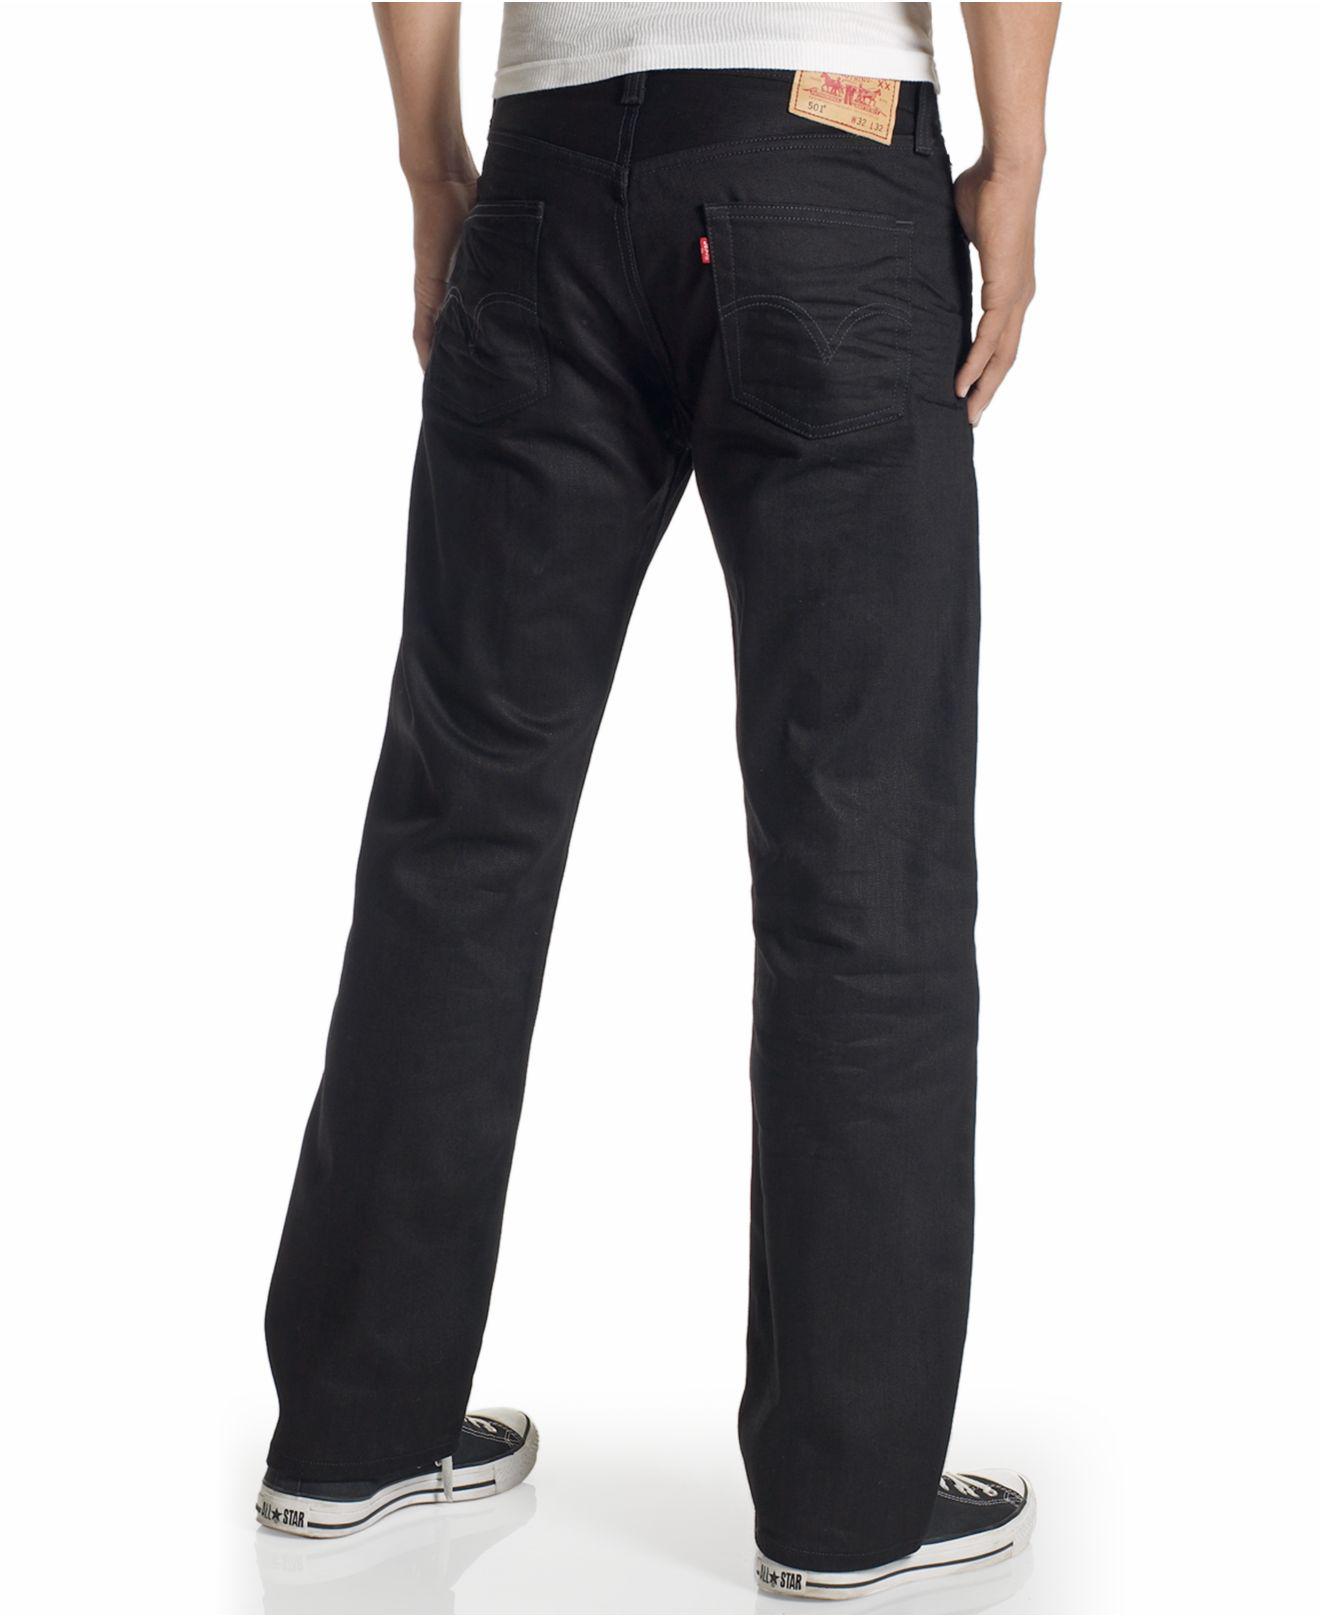 Lyst - Levi's 501 Original-fit Jeans in Black for Men